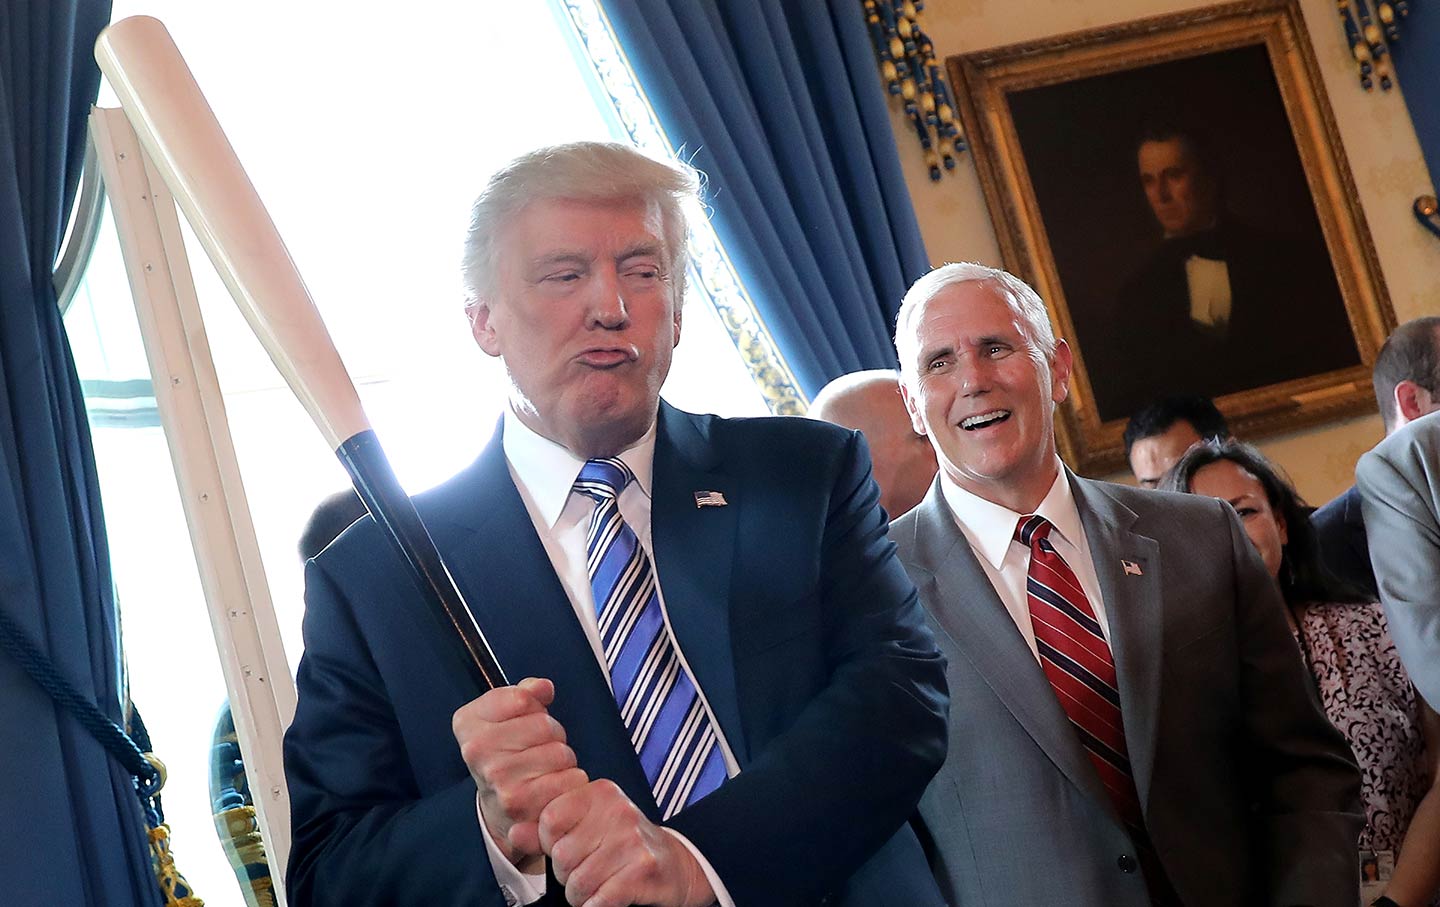 Donald Trump Holding a Baseball Bat